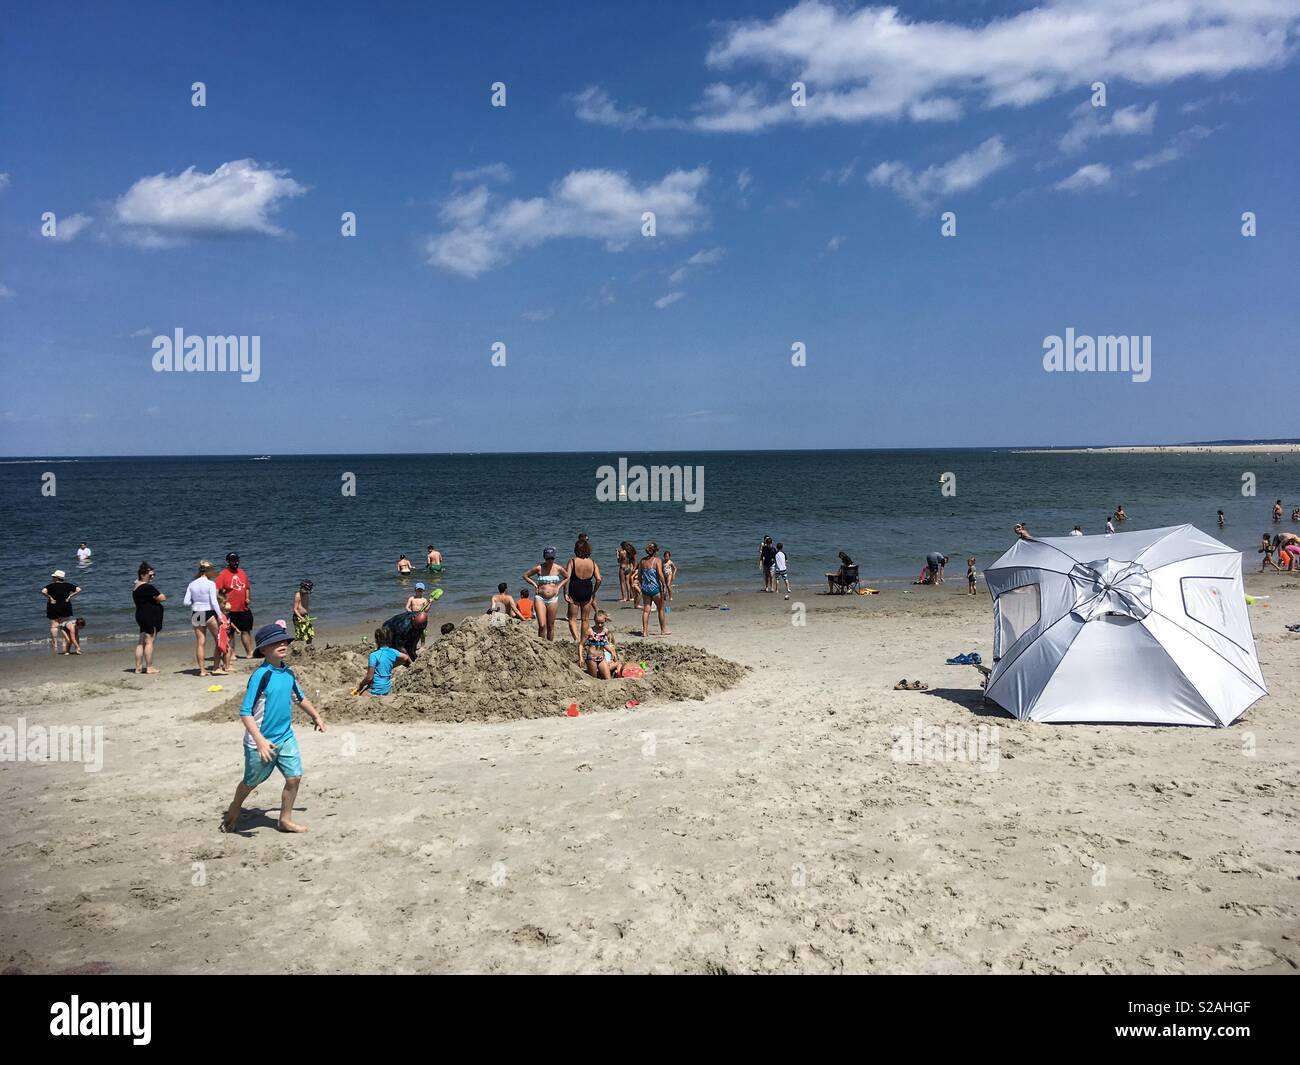 Crane Beach - Ipswich, MA, USA Stock Photo - Alamy